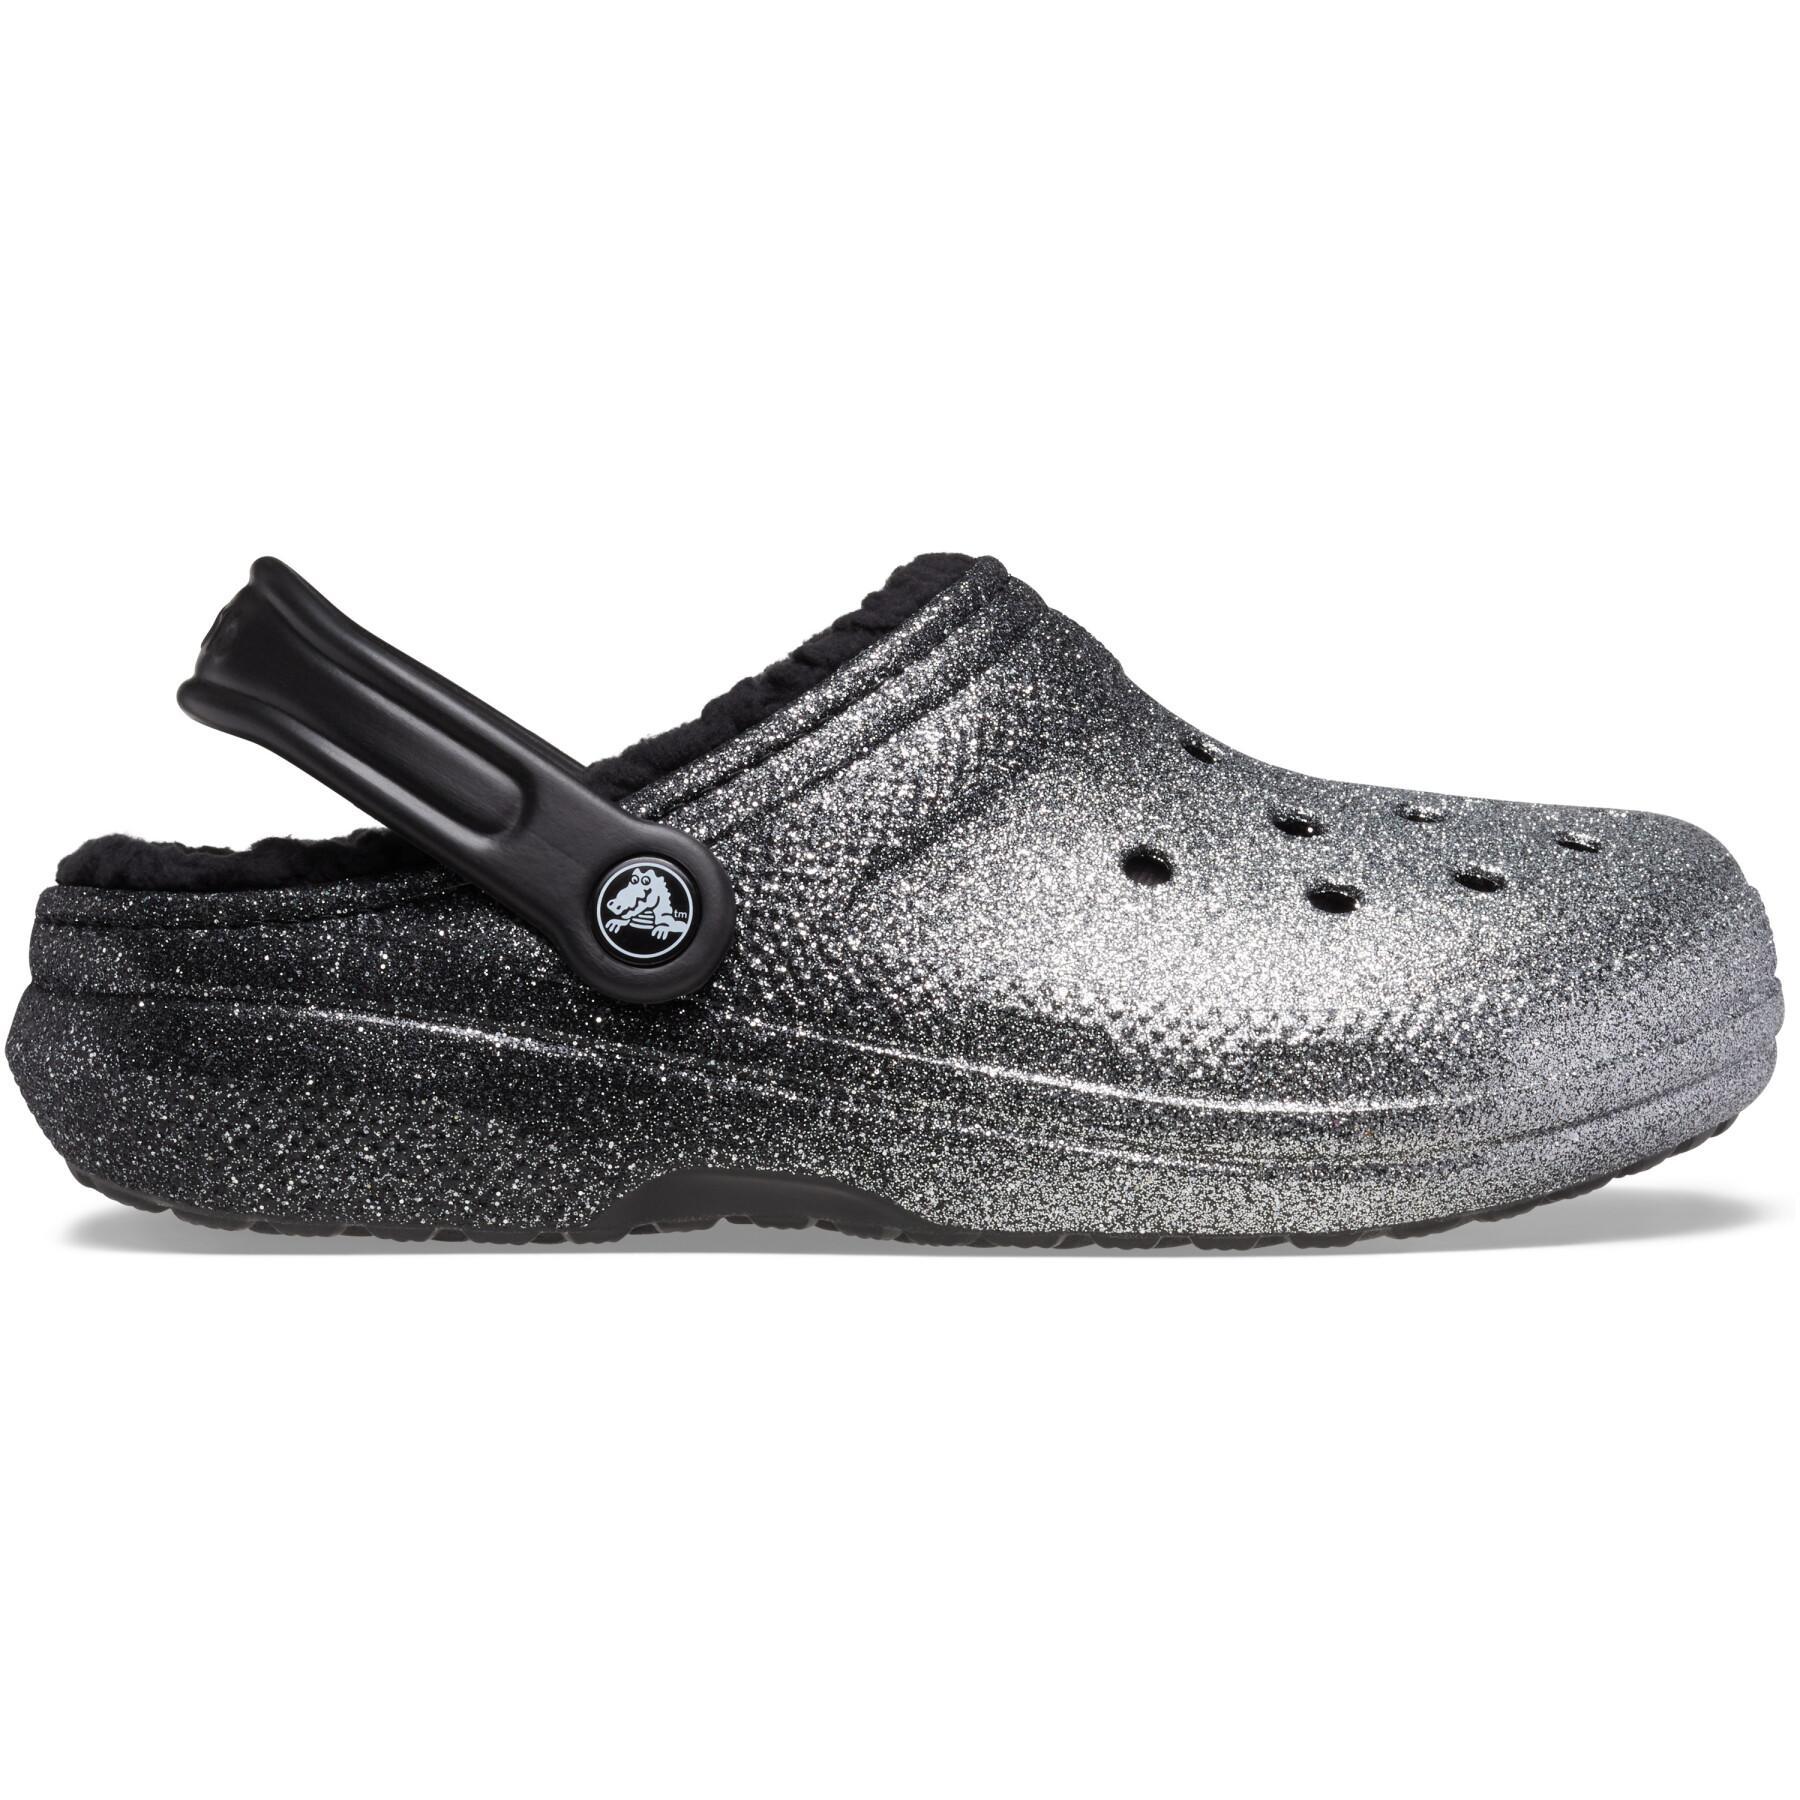 Tamancos Crocs Classic Glitter Lined Clog